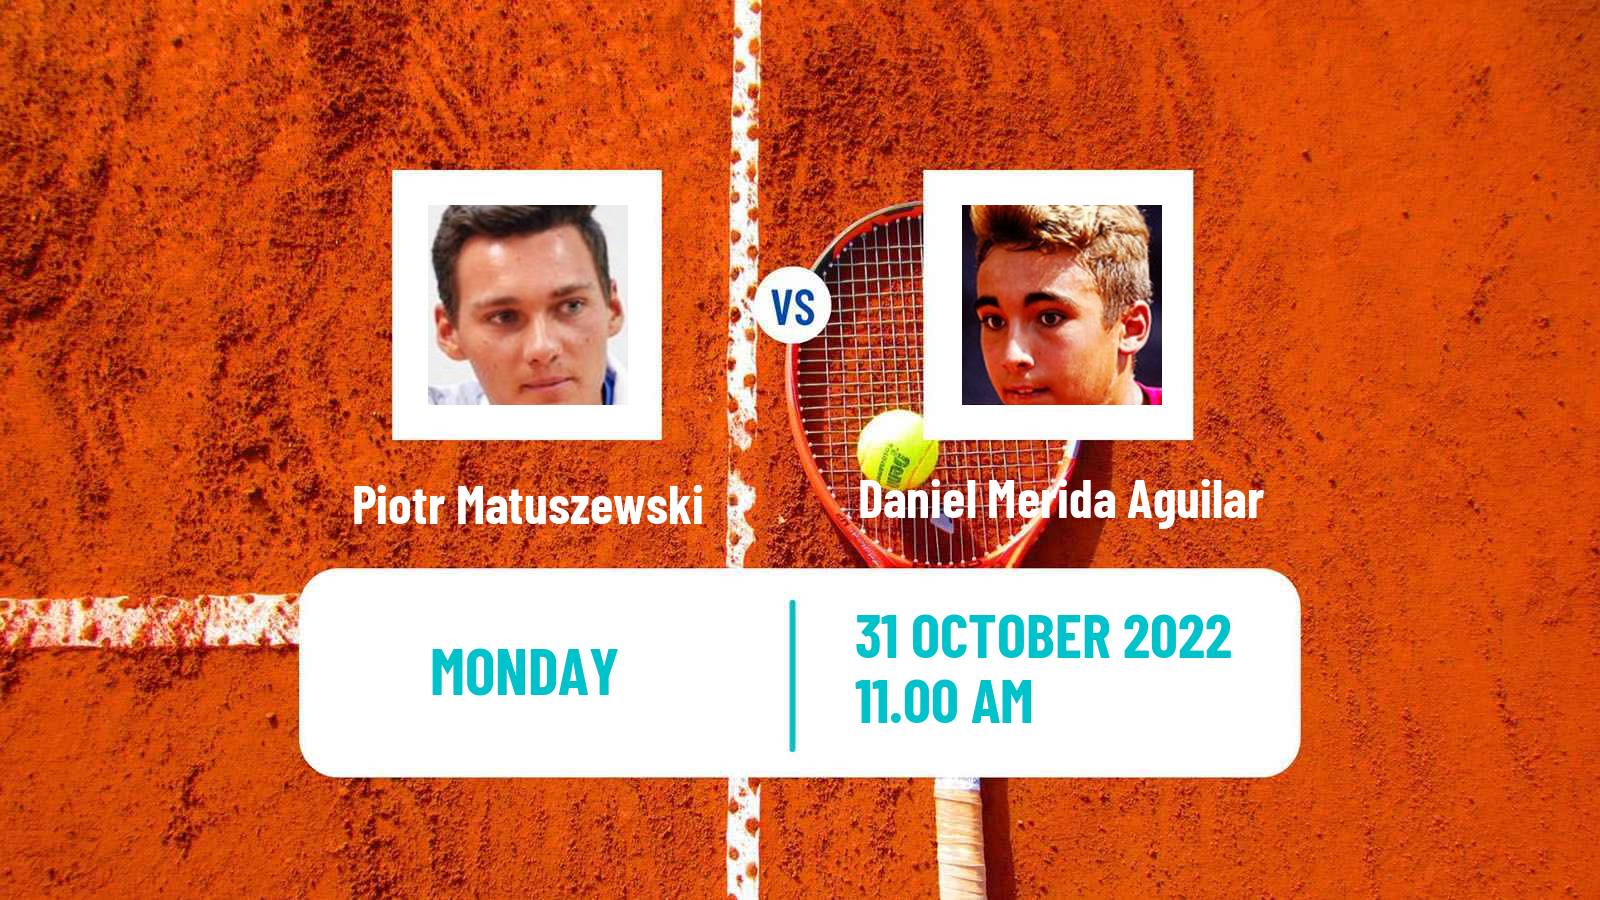 Tennis ATP Challenger Piotr Matuszewski - Daniel Merida Aguilar